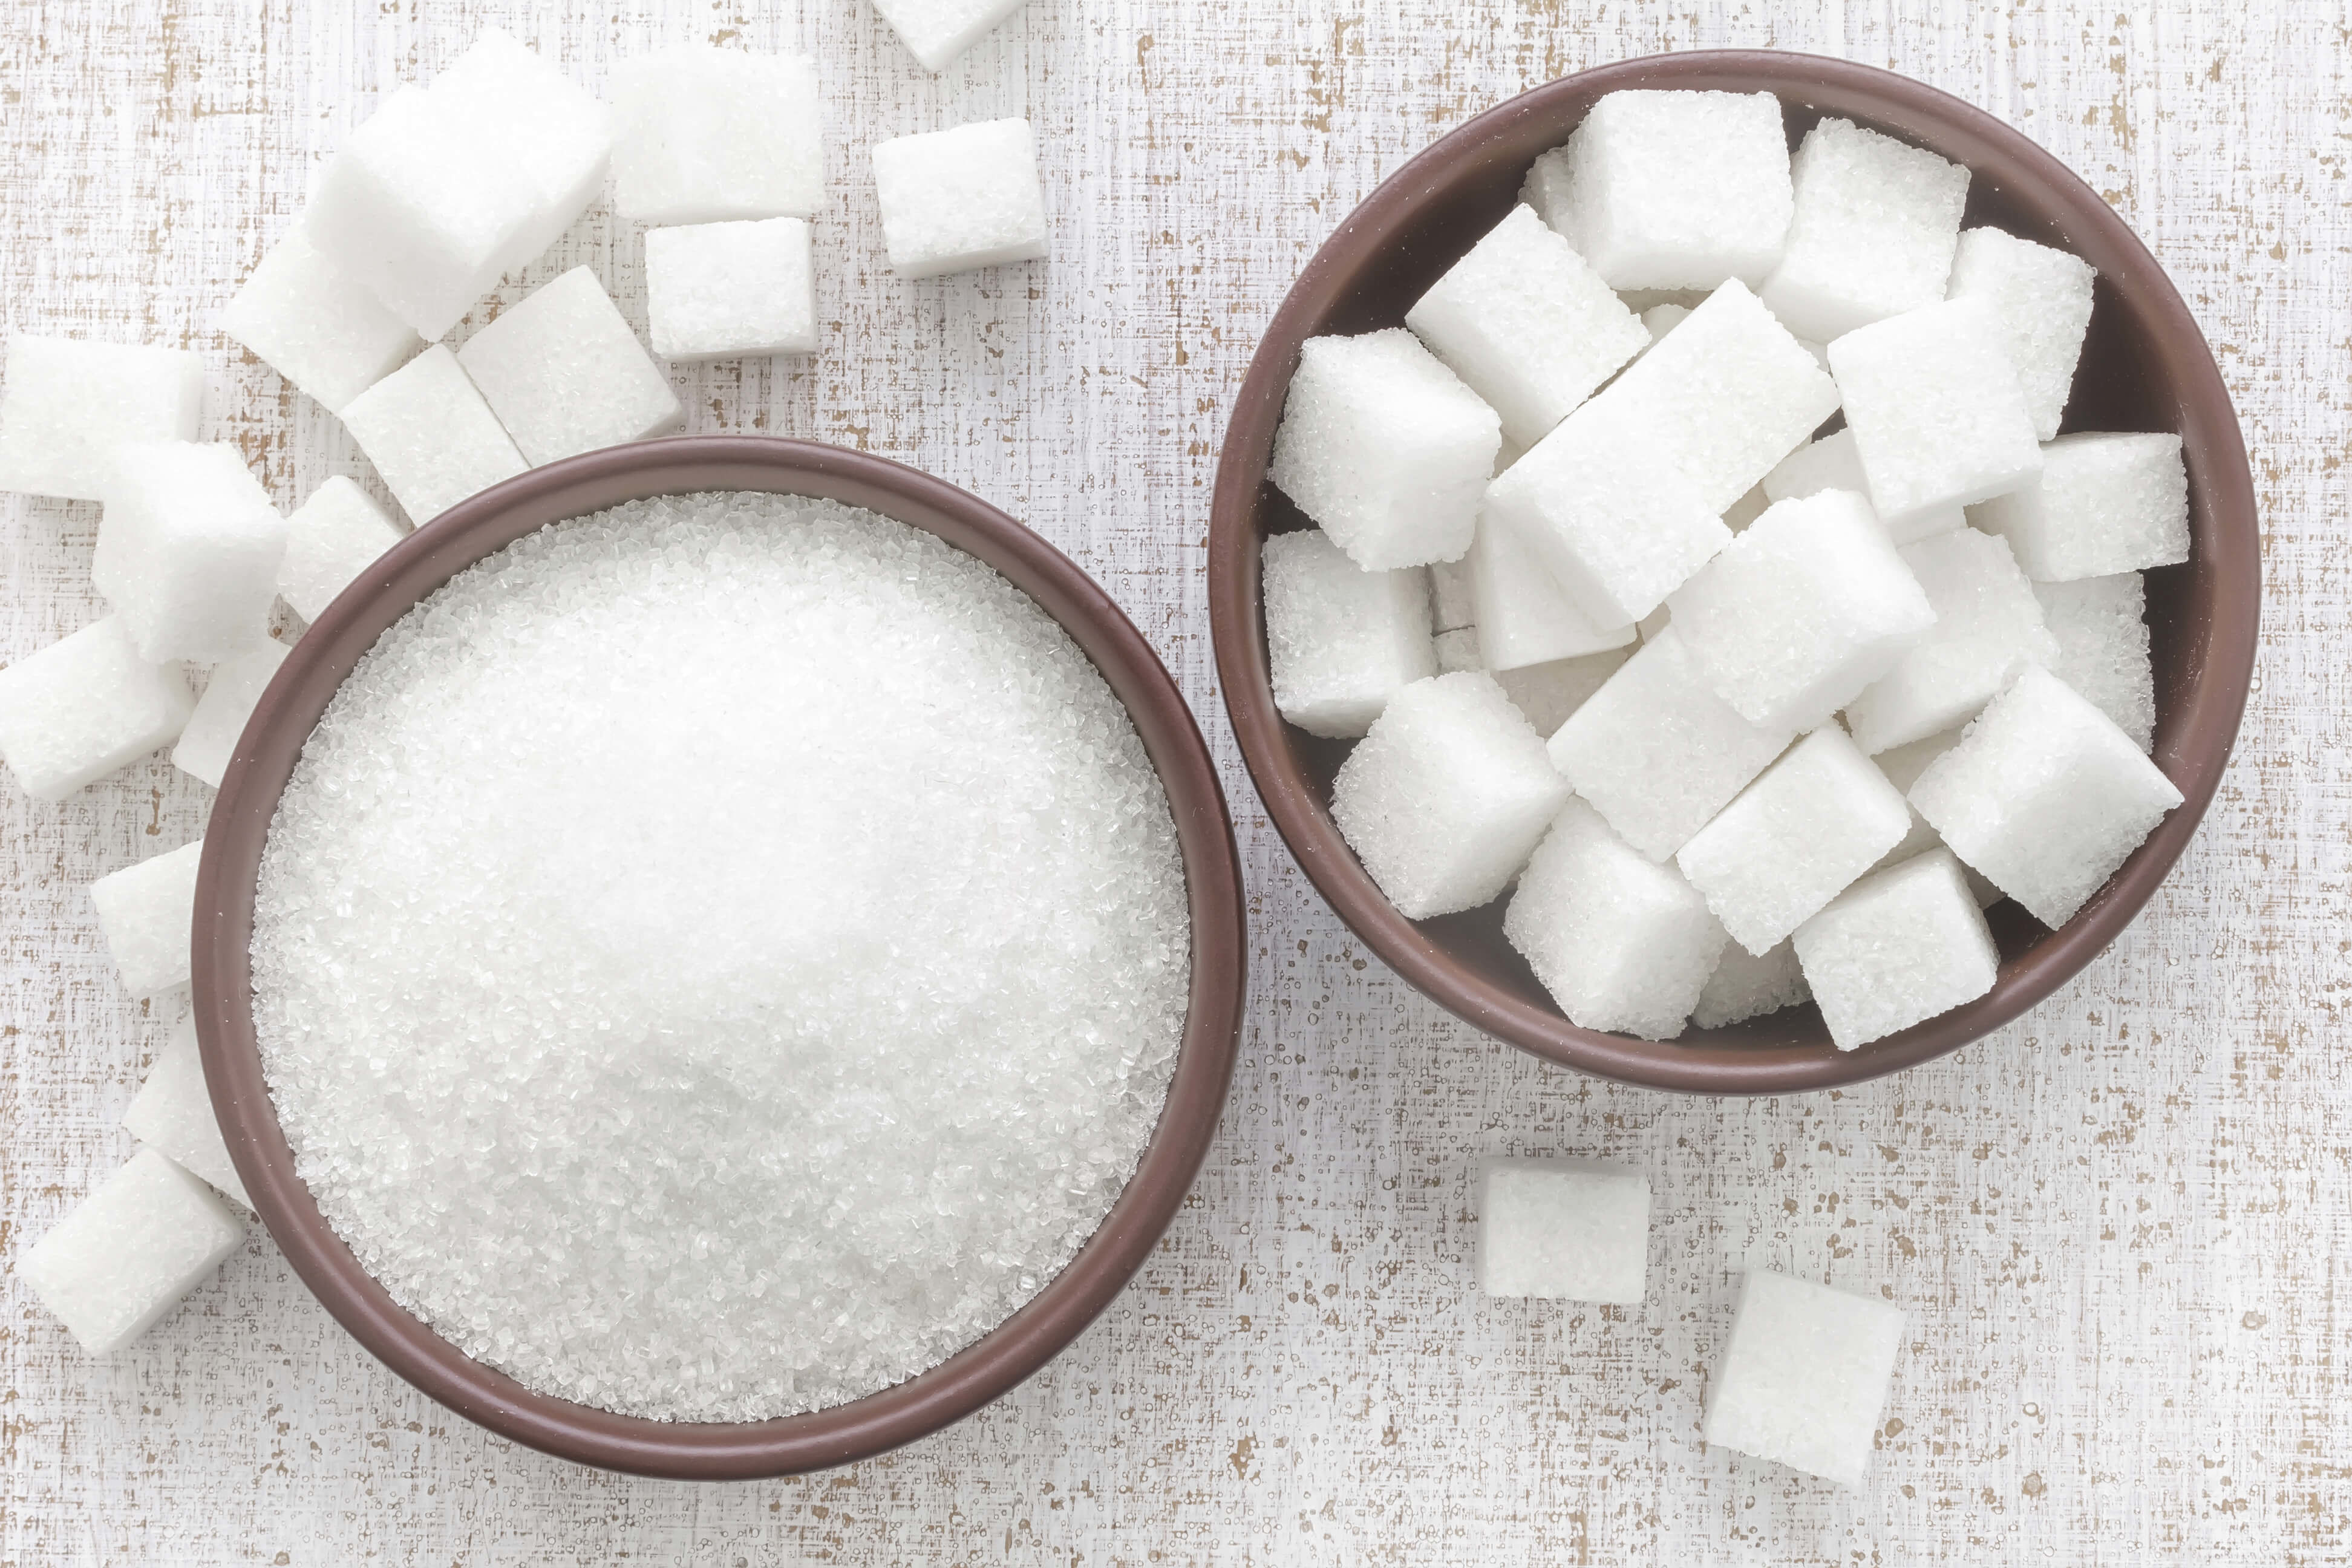 Сахар по Евростандартам. Производители ожидают увеличение экспорта